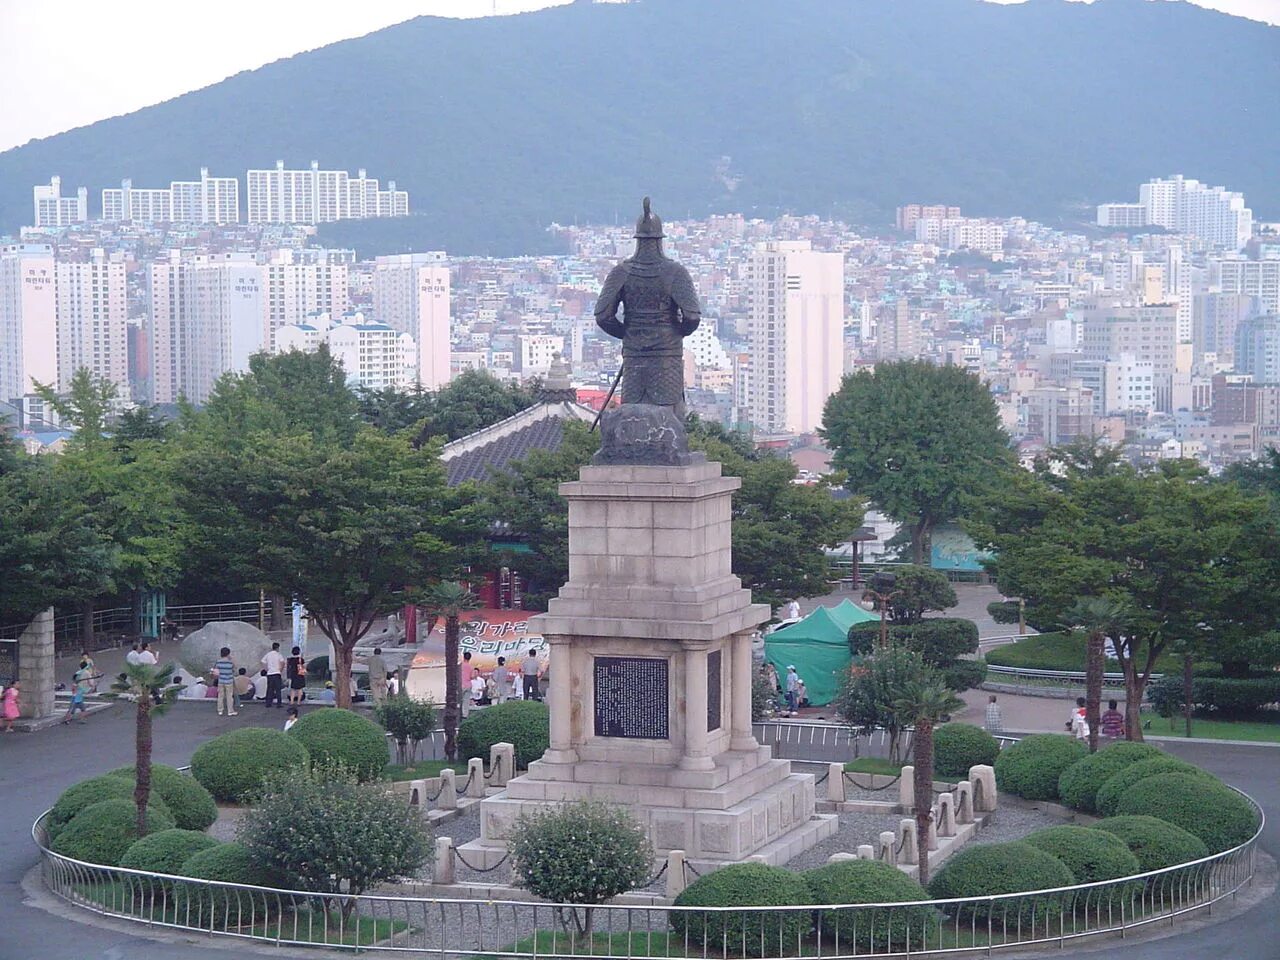 Ли сун сине. Статуя ли Сун сина в Сеуле. Статуя Адмирала ли Сун сина - Сеул. Ли Сун син памятник. Памятник ли Сунсину в Сеуле.